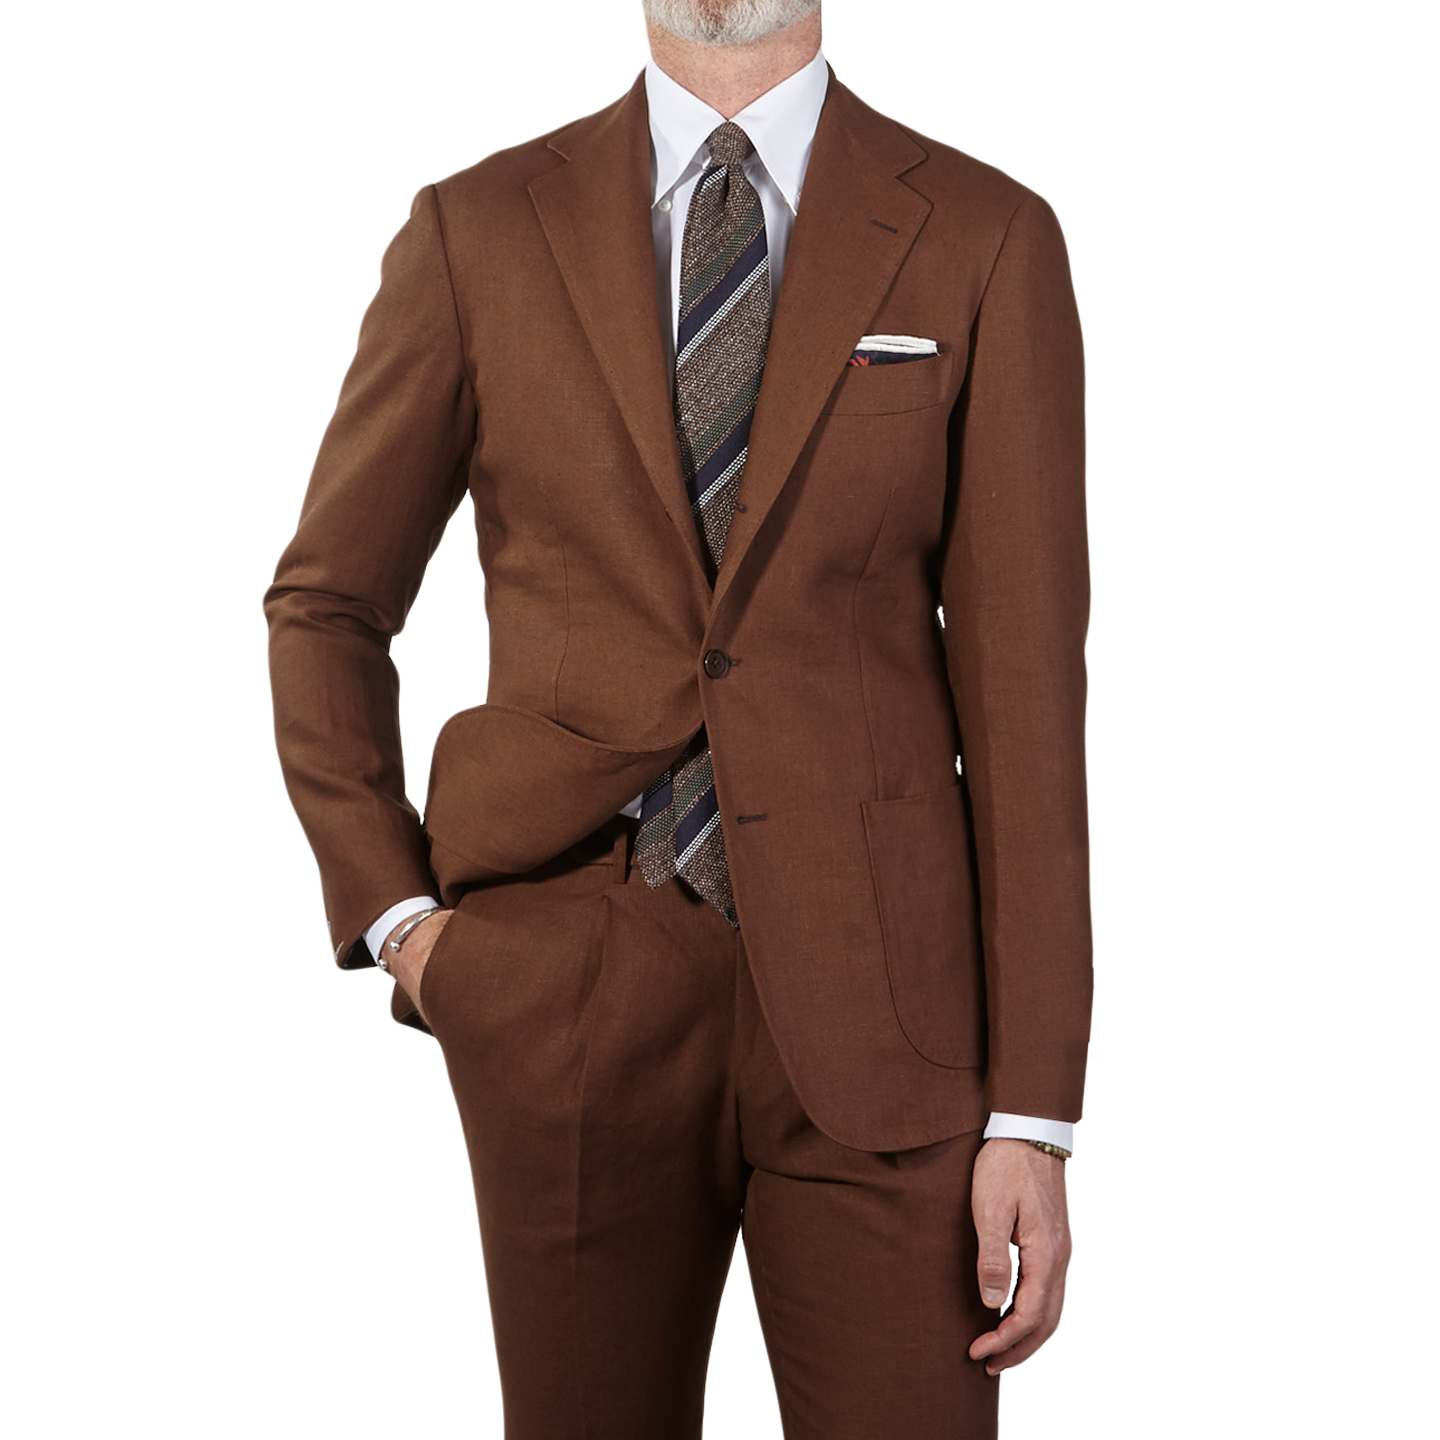 Ring Jacket - Tobacco Irish Linen Suit | Baltzar